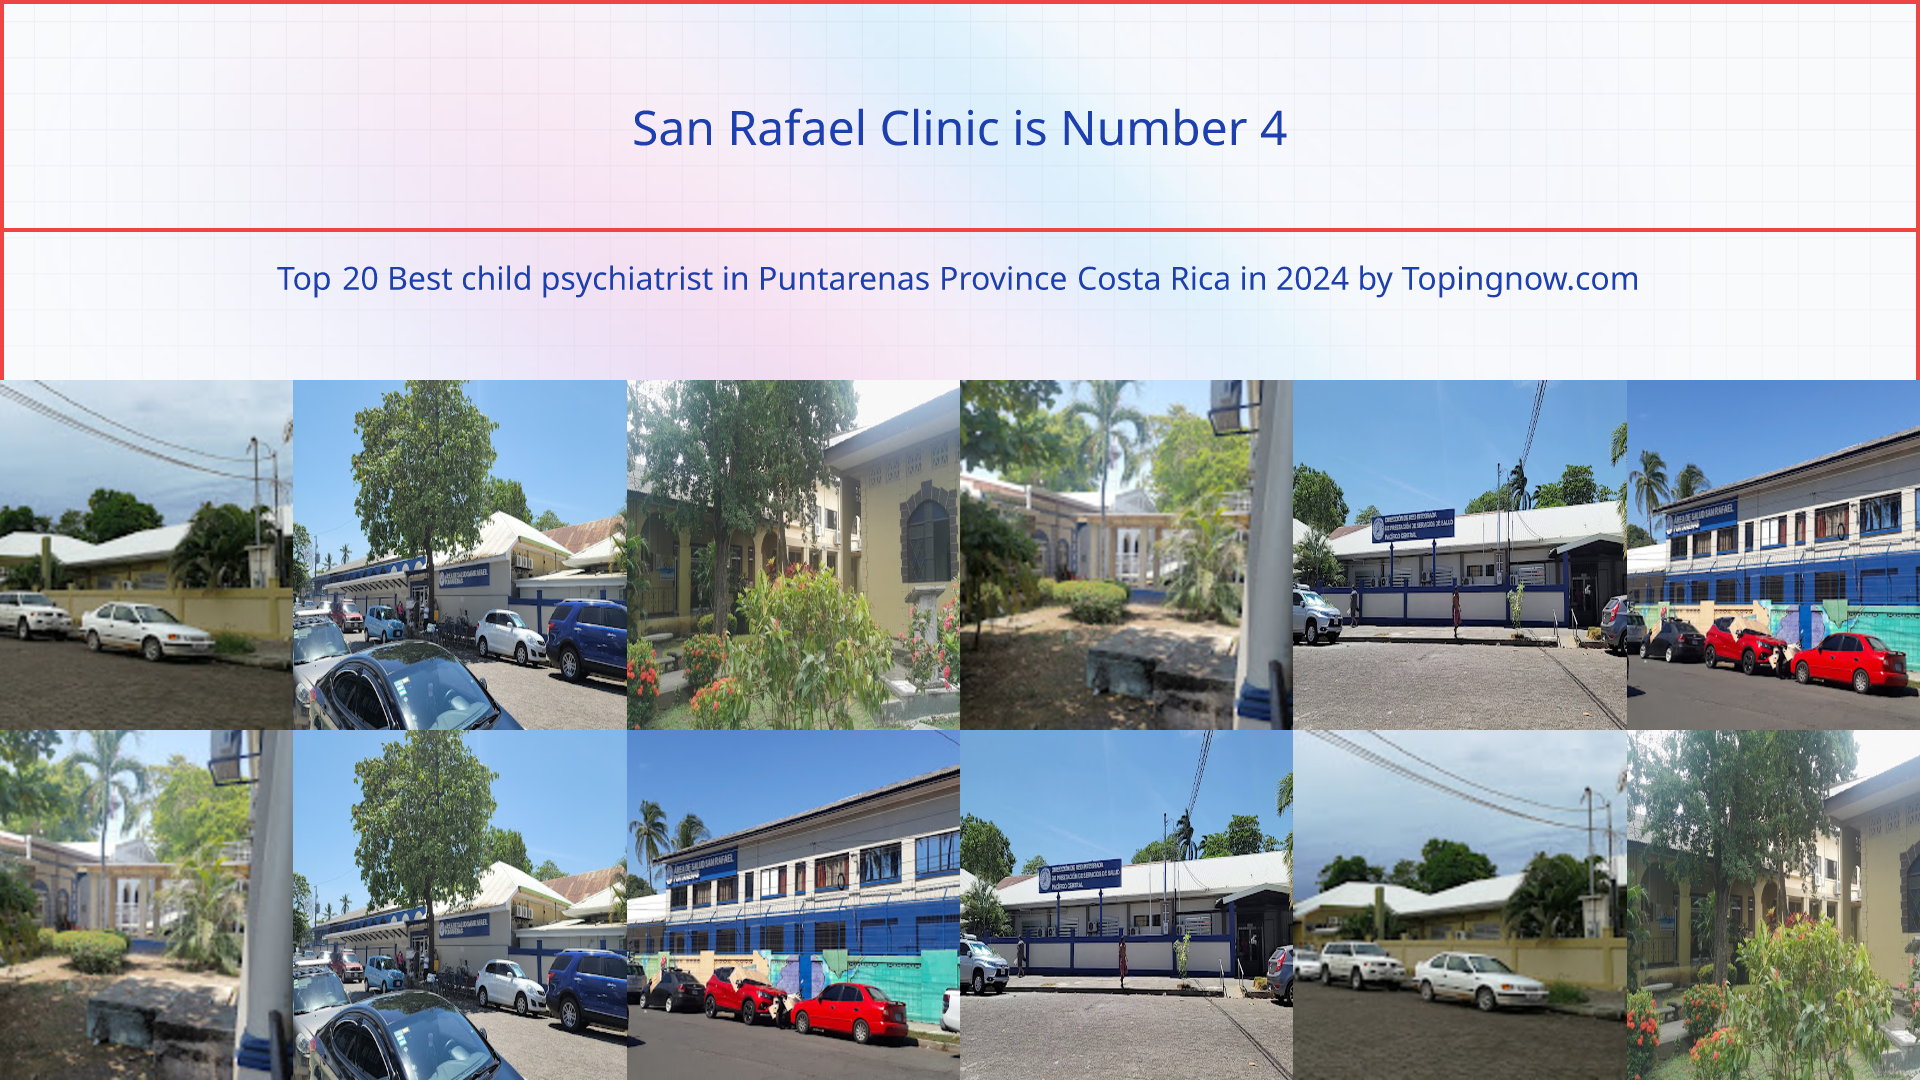 San Rafael Clinic: Top 20 Best child psychiatrist in Puntarenas Province Costa Rica in 2024